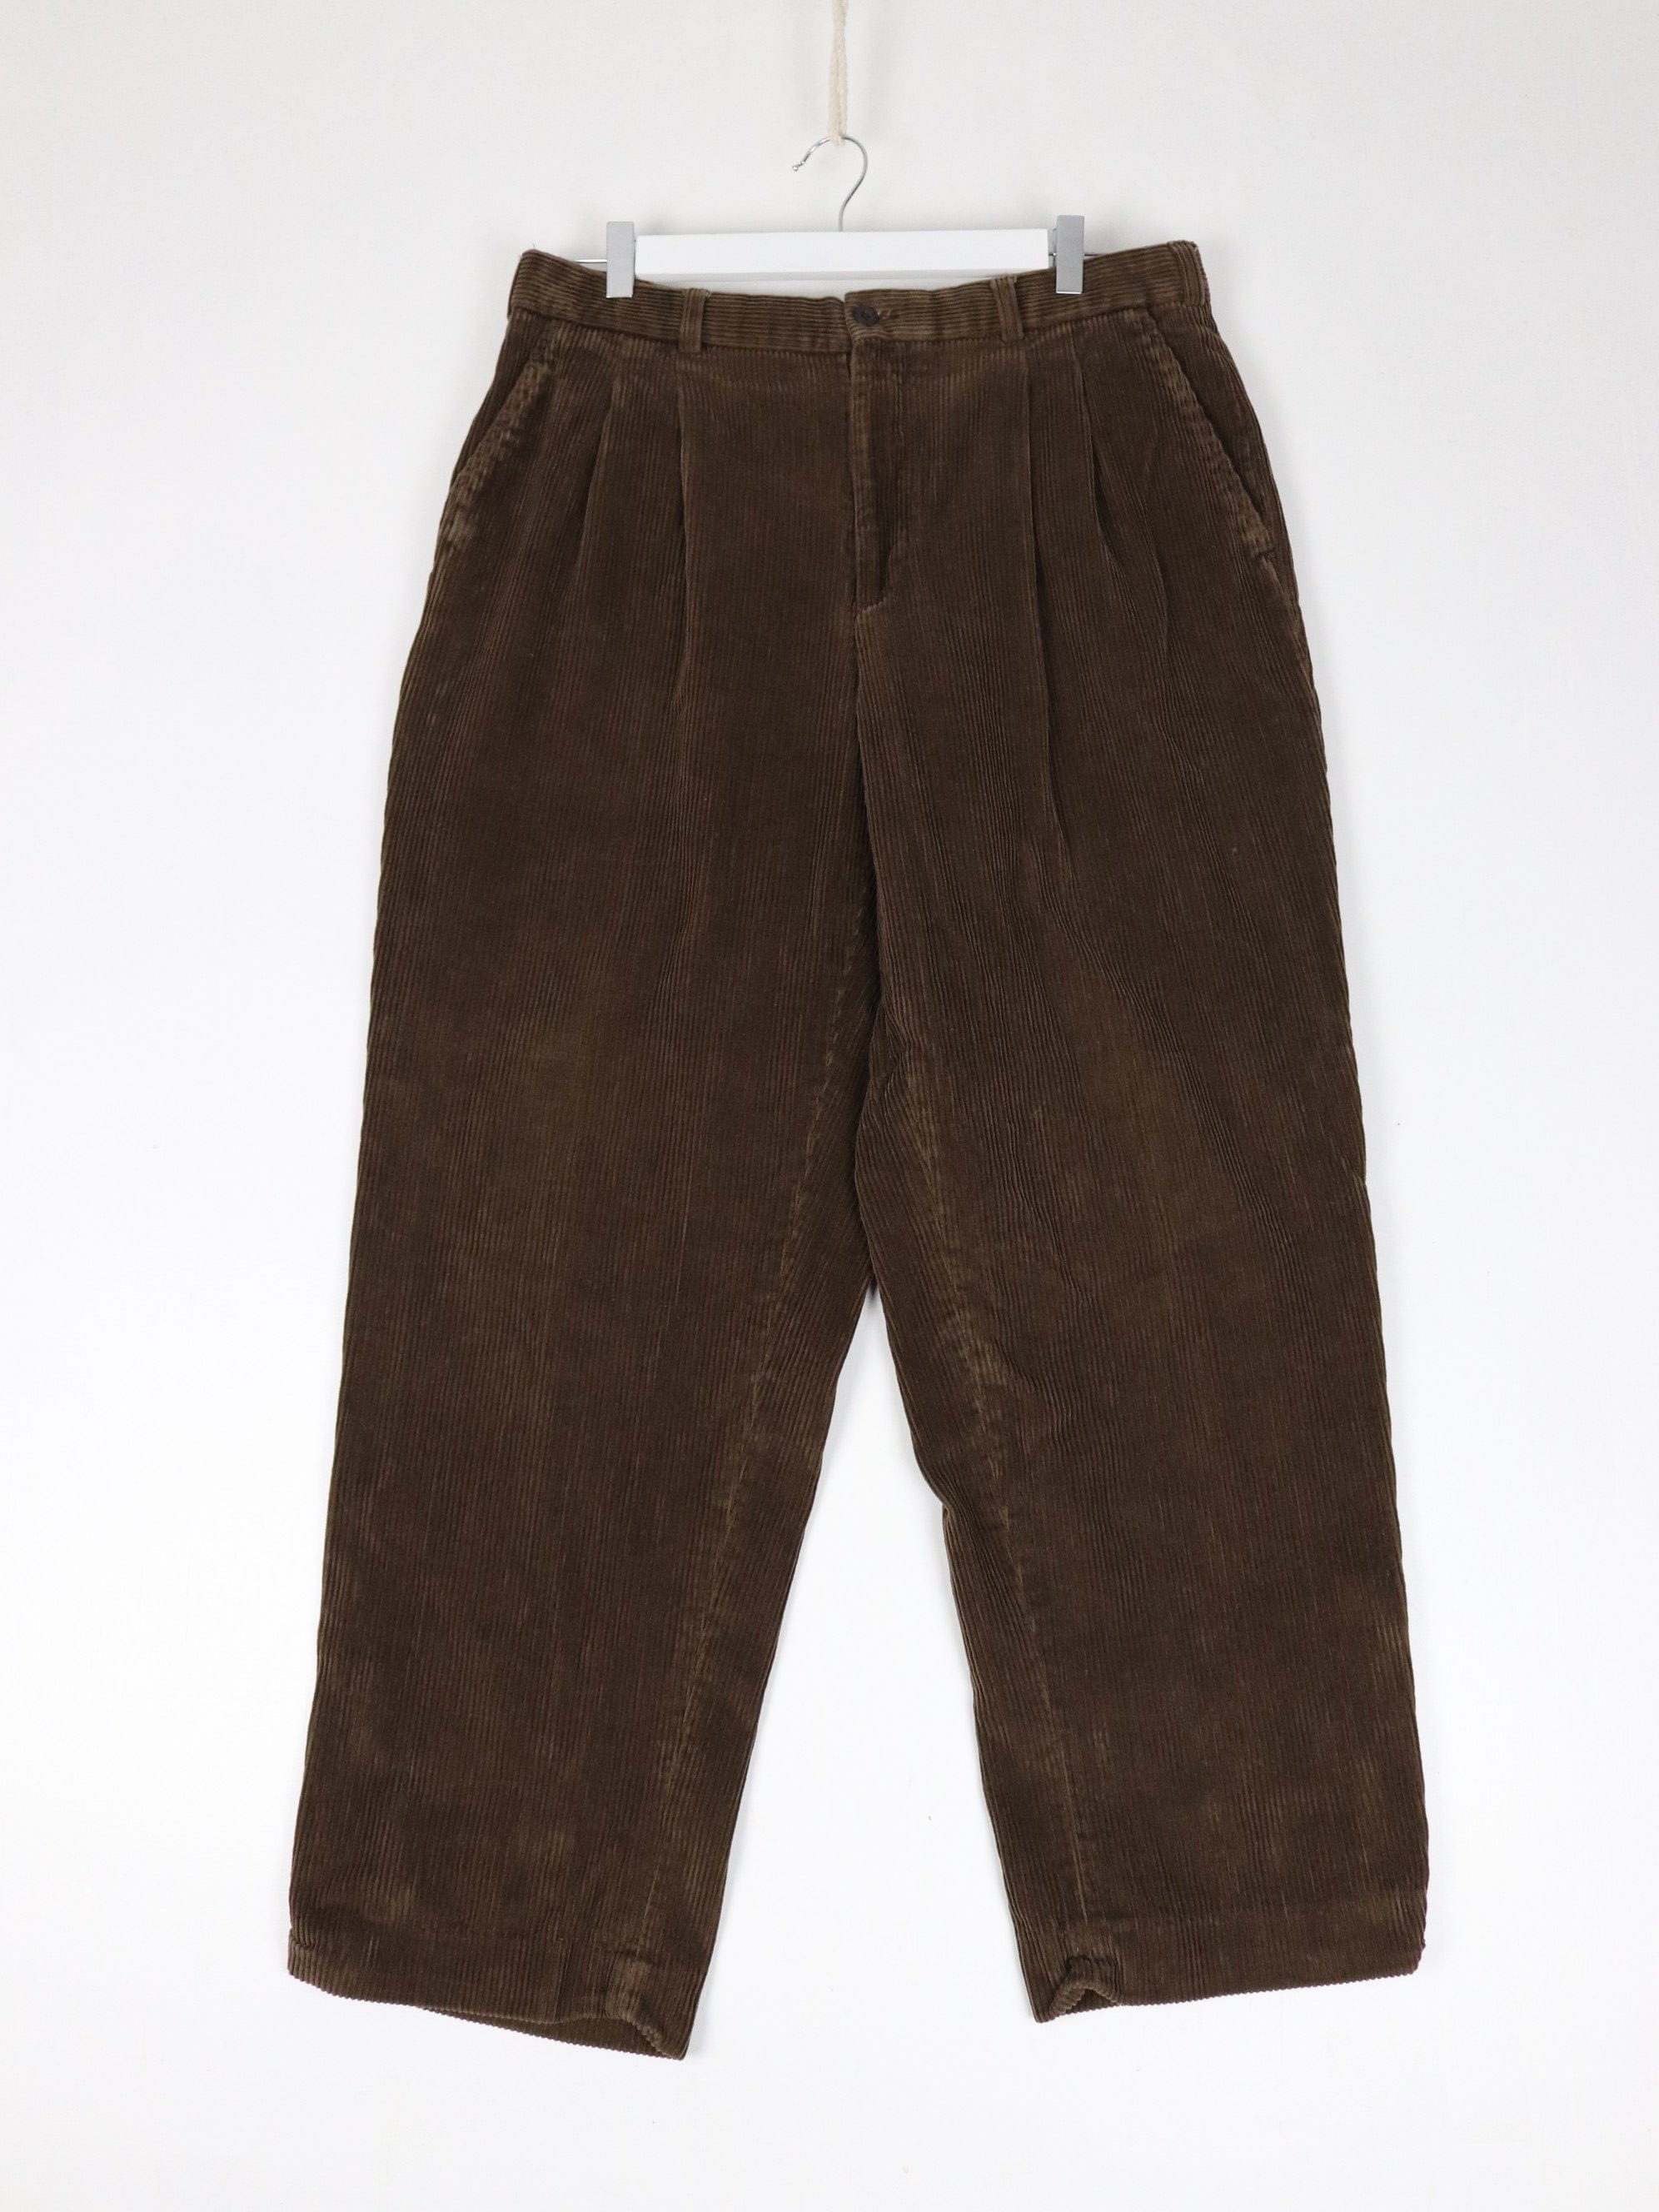 Mantle Pants Mens 36 x 30 Brown Corduroy Trousers – Proper Vintage